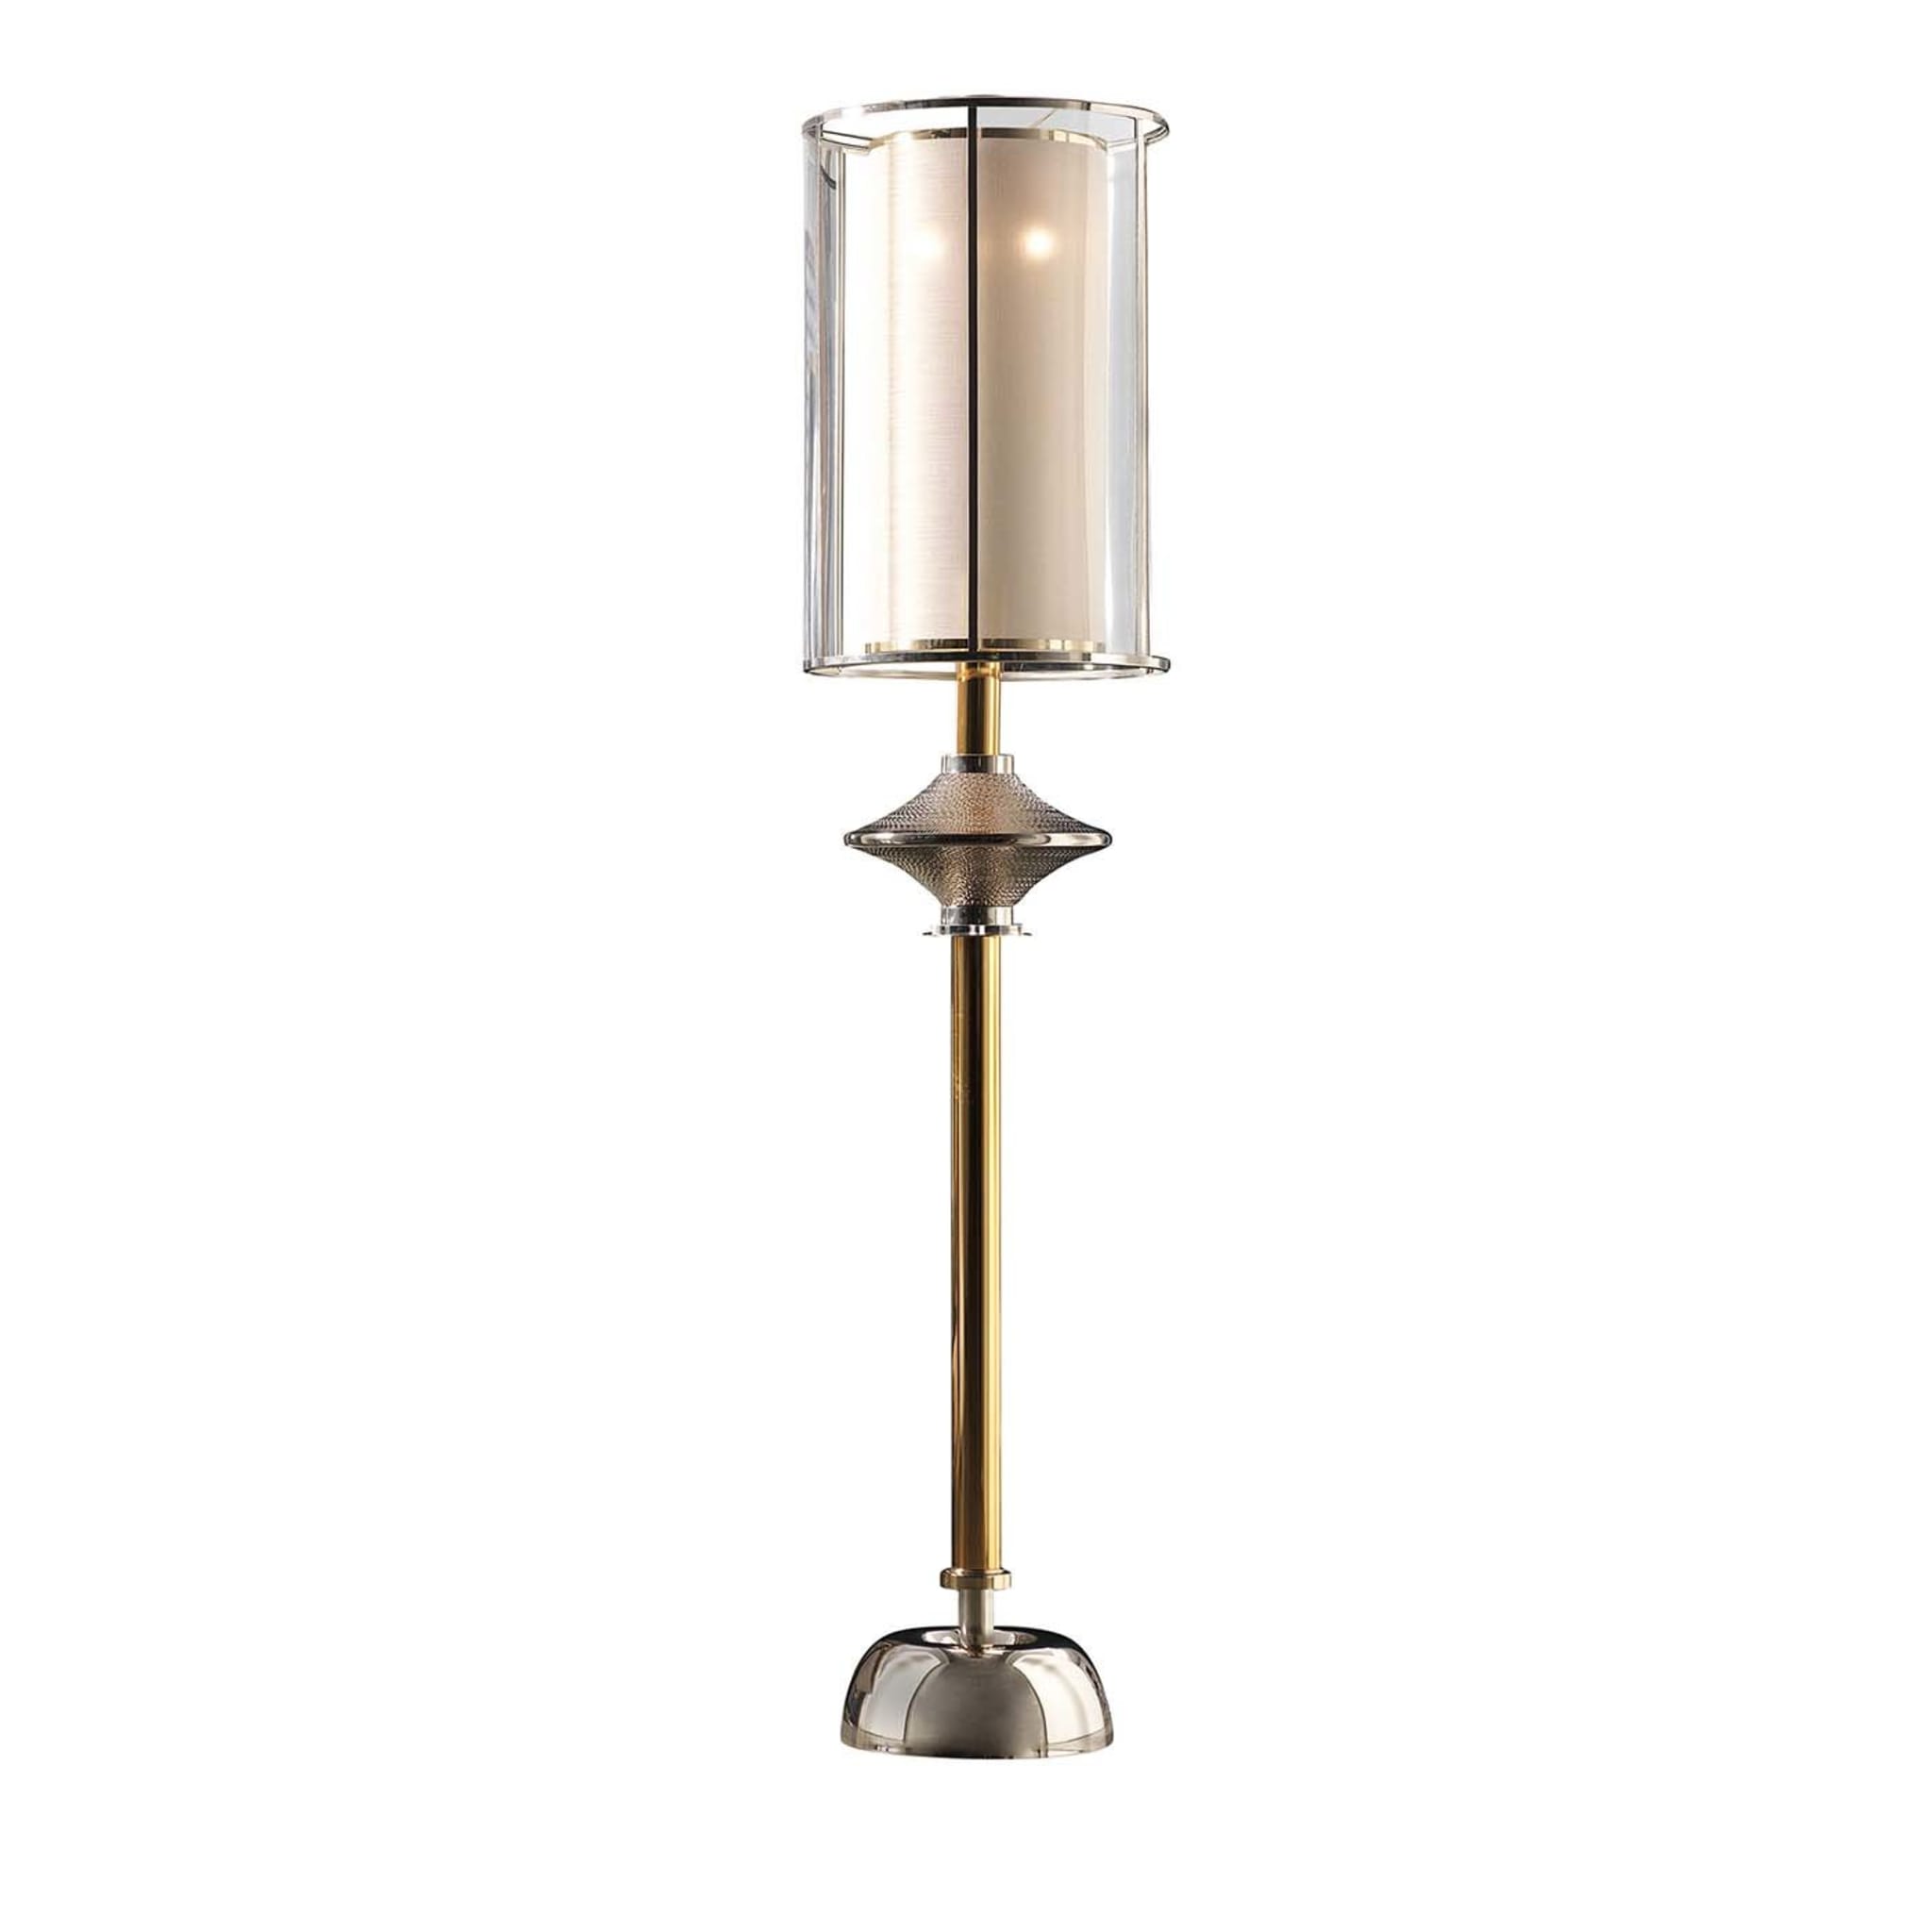 Z628 Brass and Nickel Floor Lamp - Main view